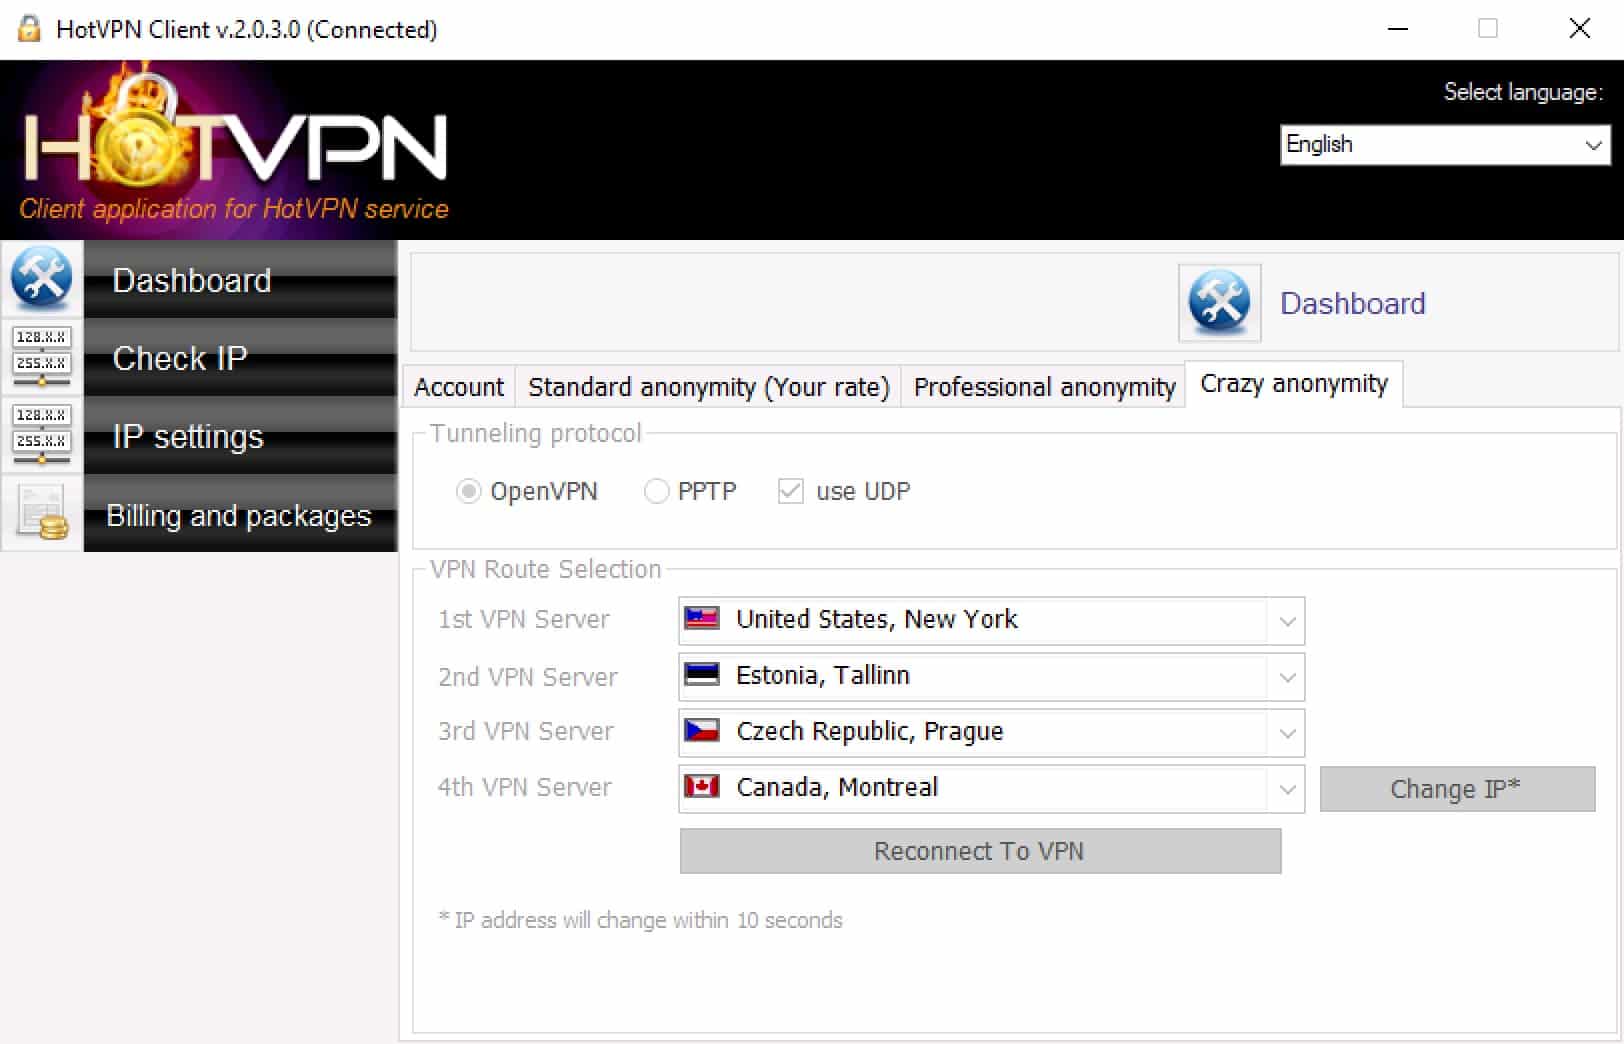 HOT VPN - Crazy Anonymity